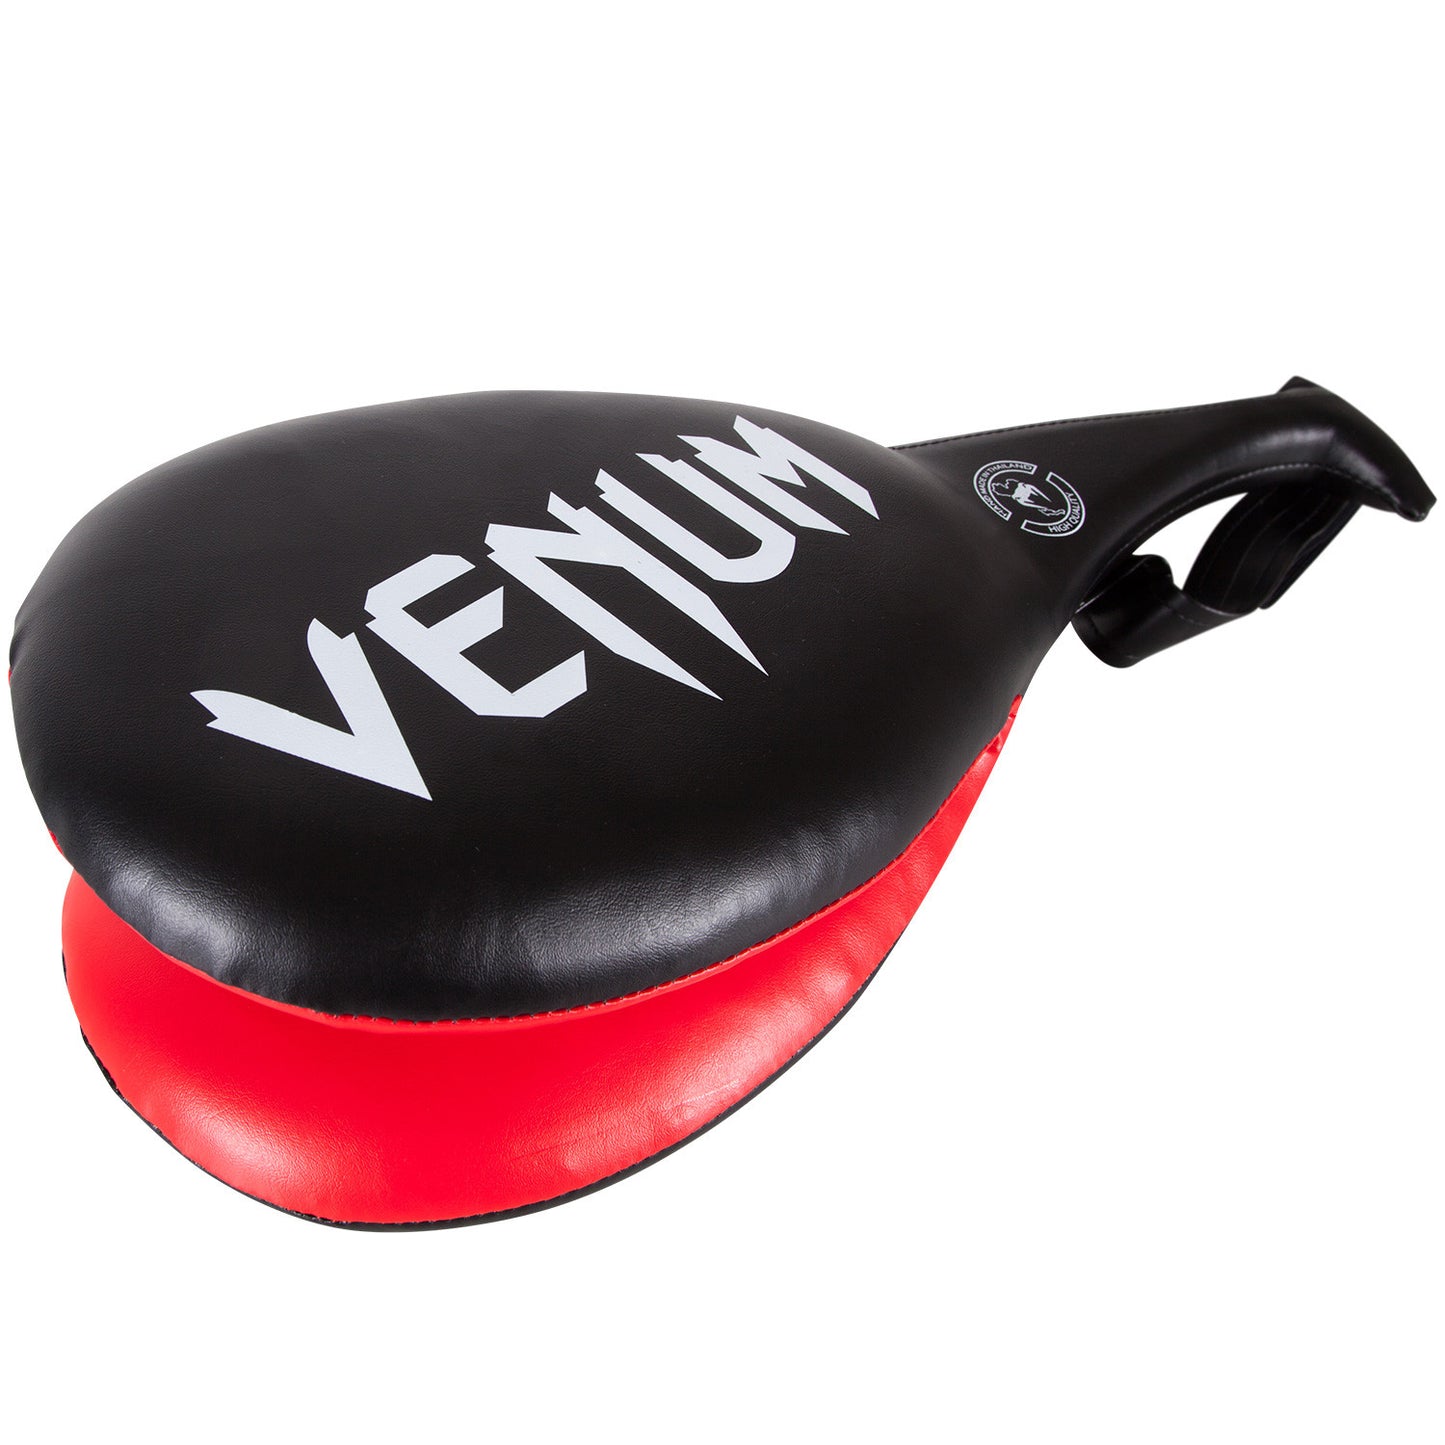 Venum Double Target Pad - Black/Red